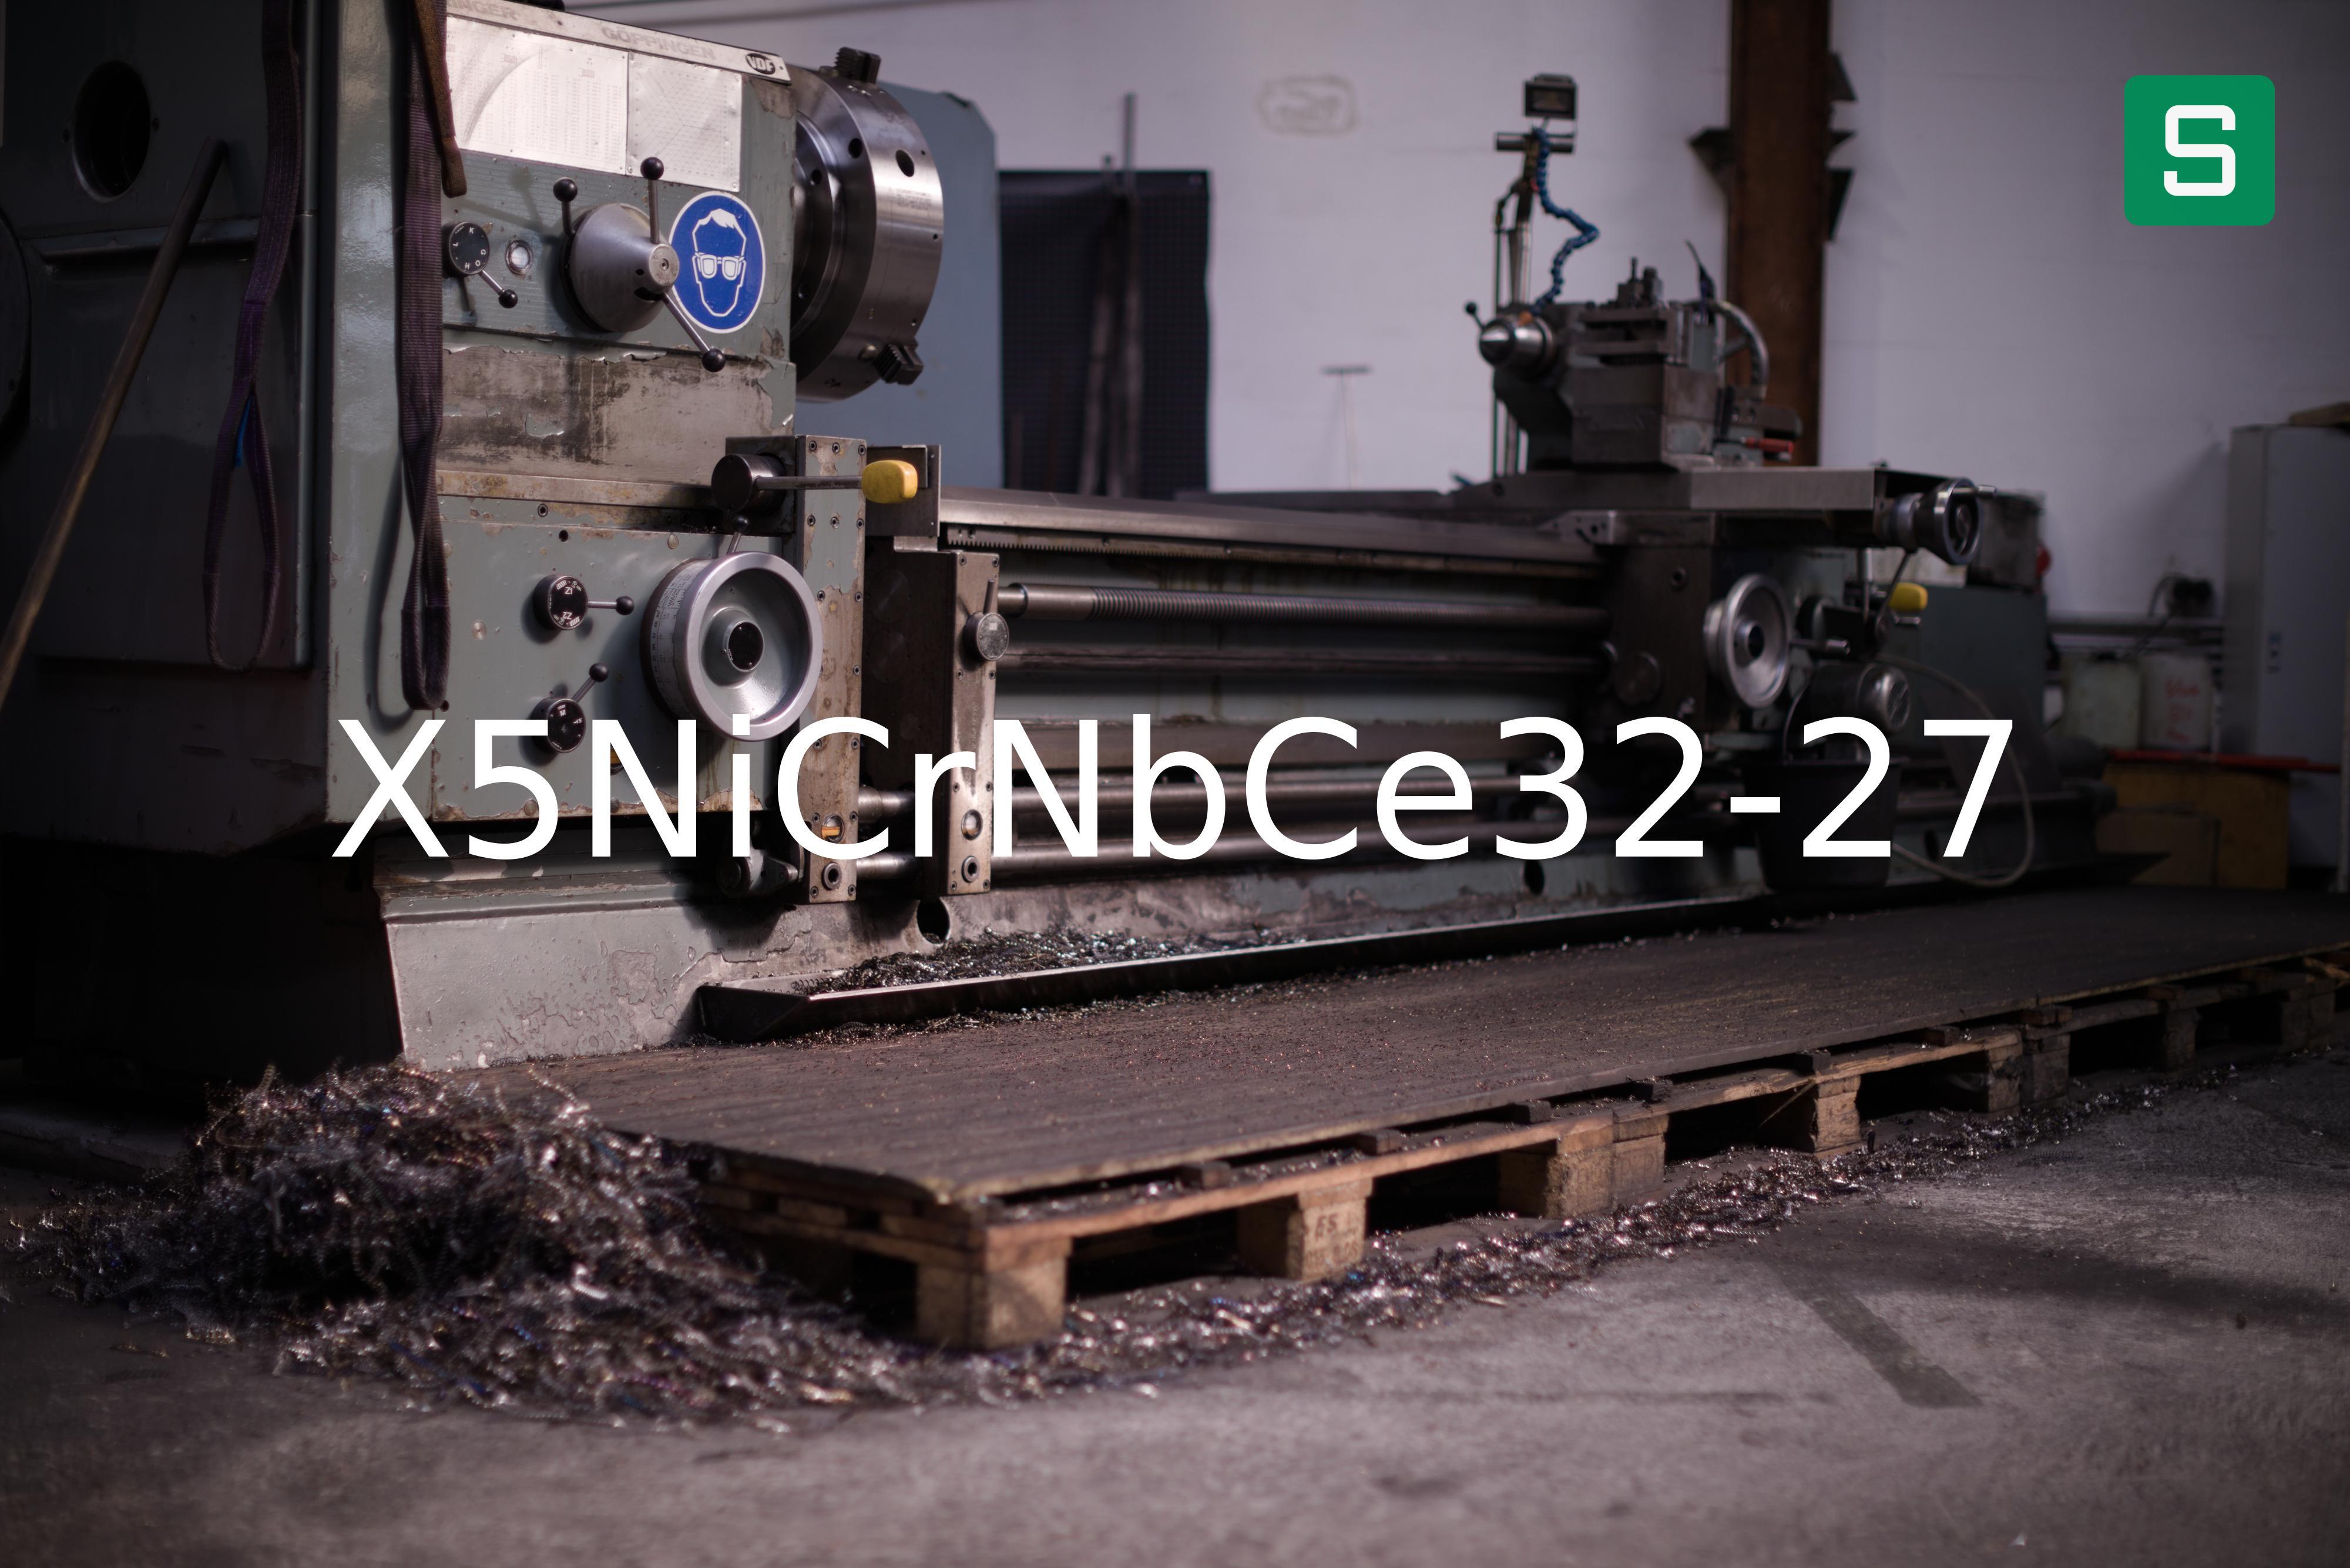 Steel Material: X5NiCrNbCe32-27